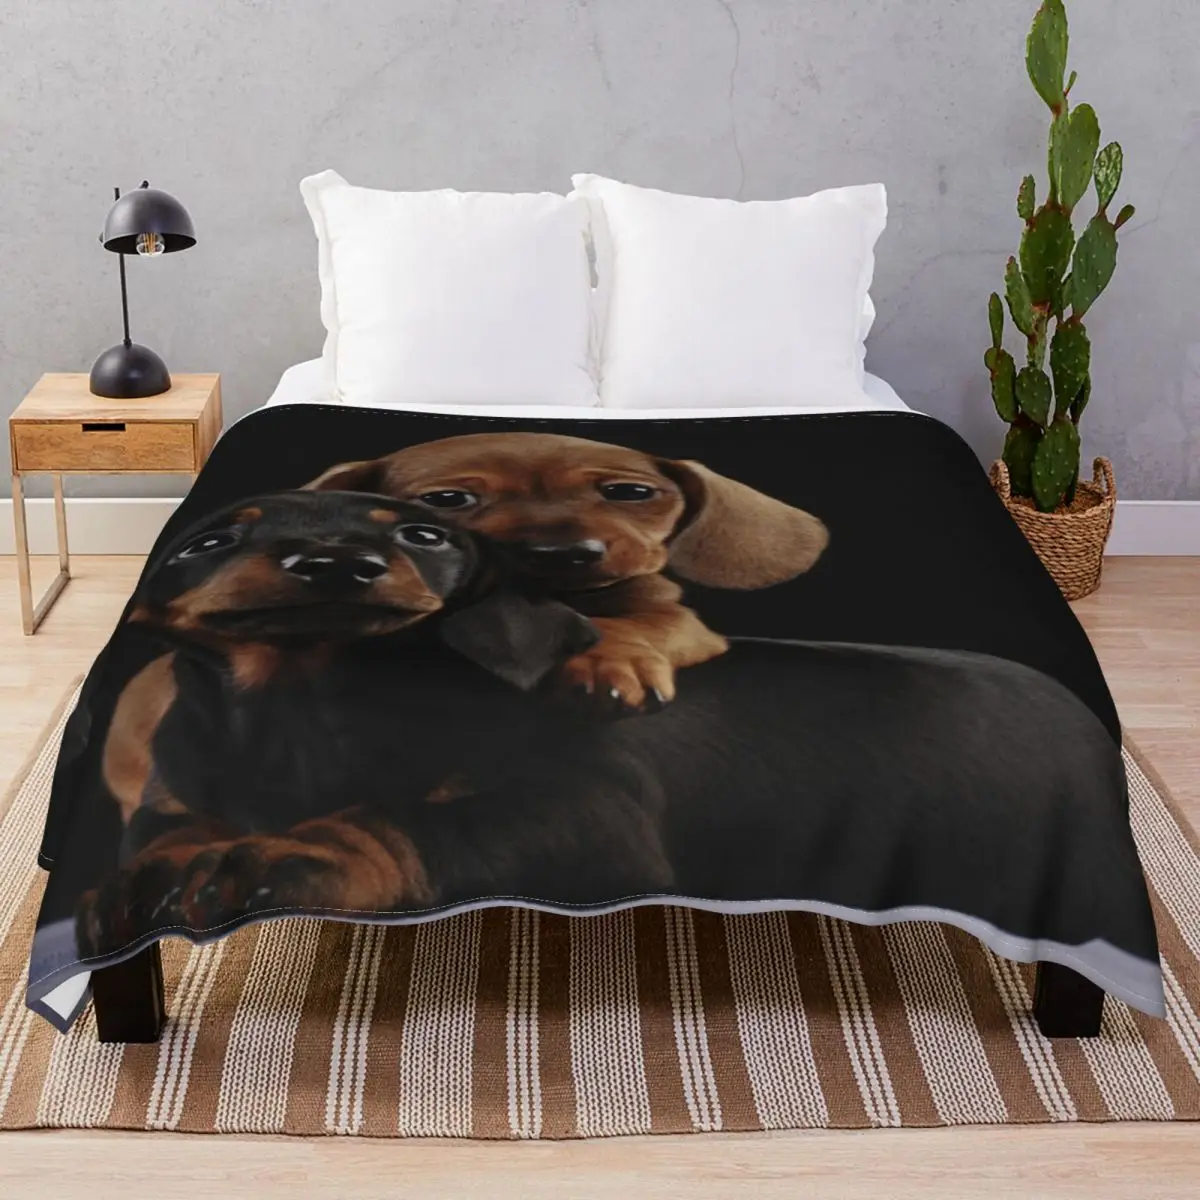 Dachshund Dog Portrait Blanket Coral Fleece Textile Decor Multi-function Unisex Throw Blankets for Bed Sofa Travel Office